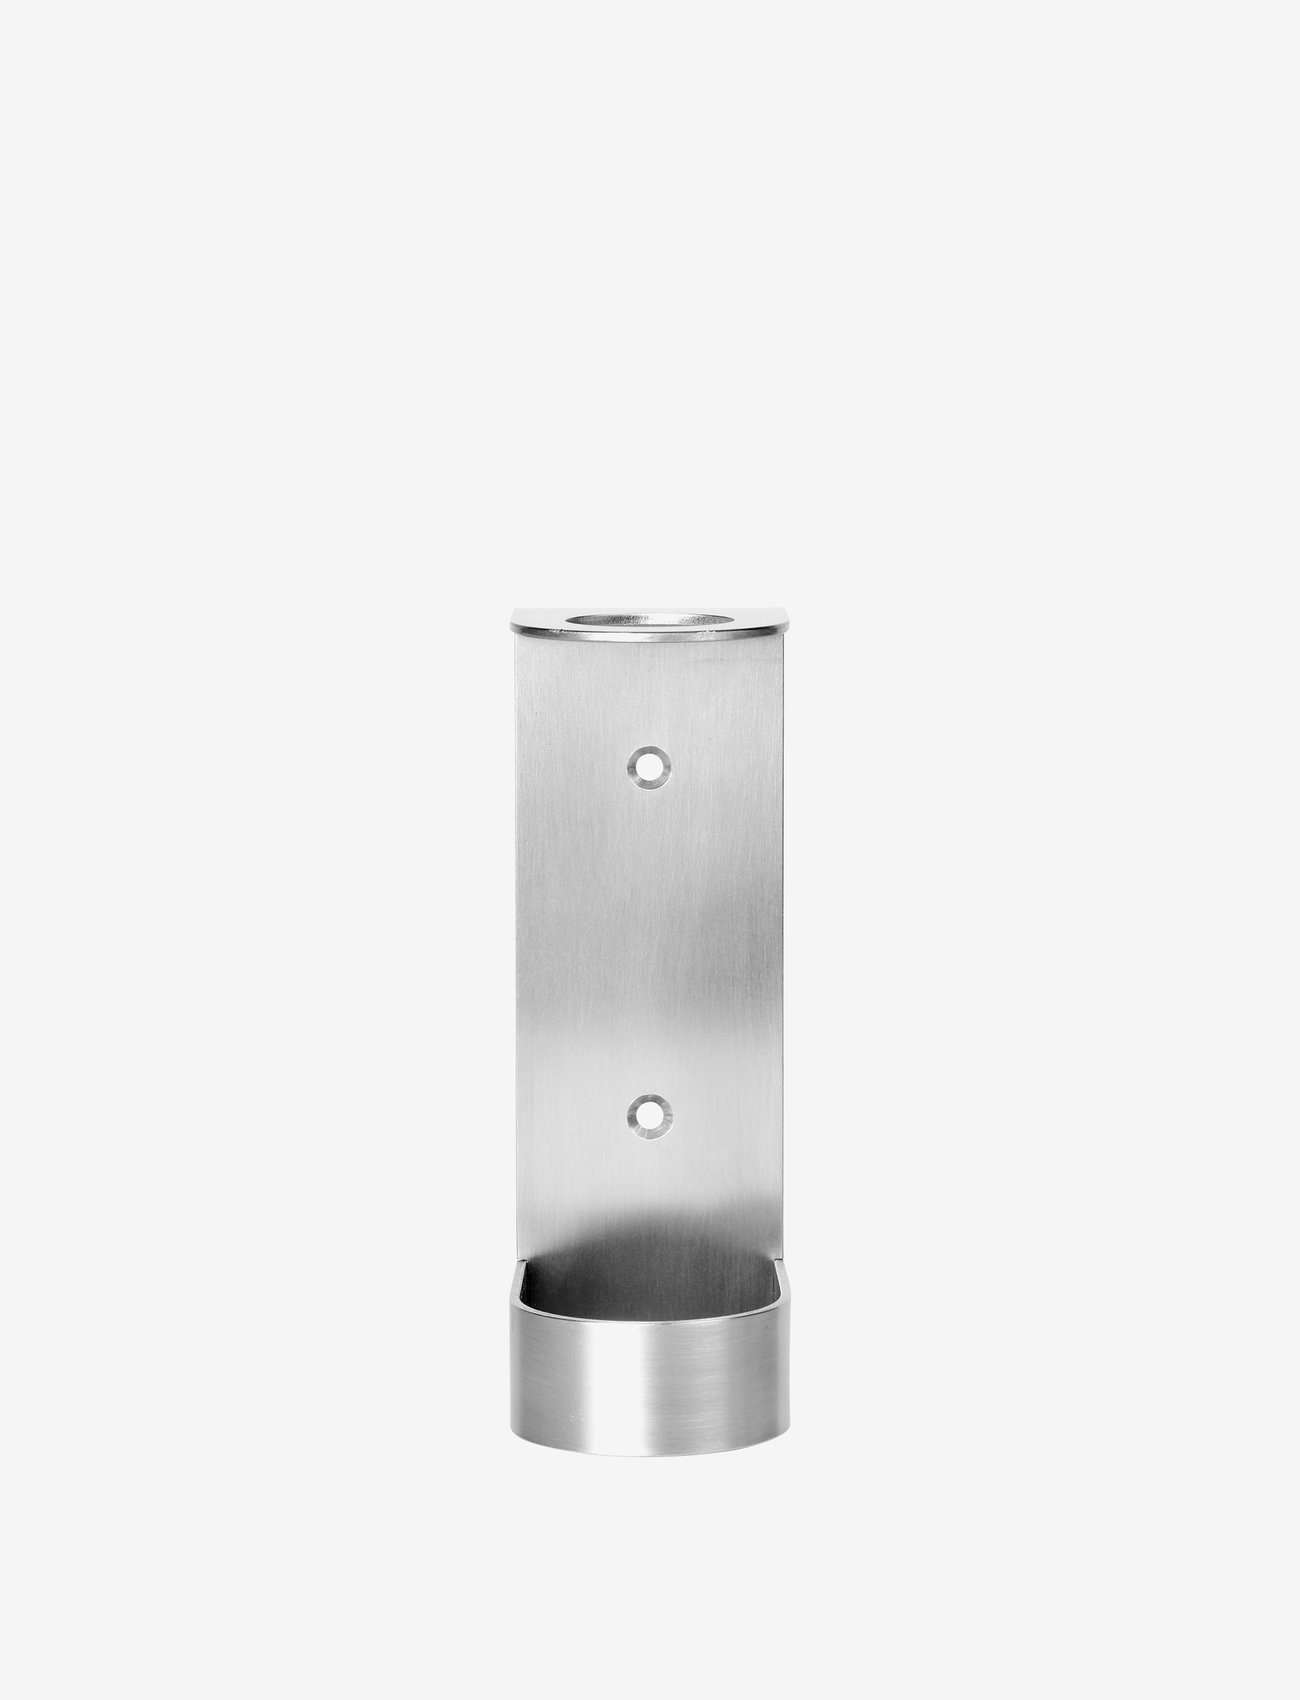 Kristina Dam Studio - Dowel Bottle Display - Hand Lotion - hooks & knobs - stainless steel - 0